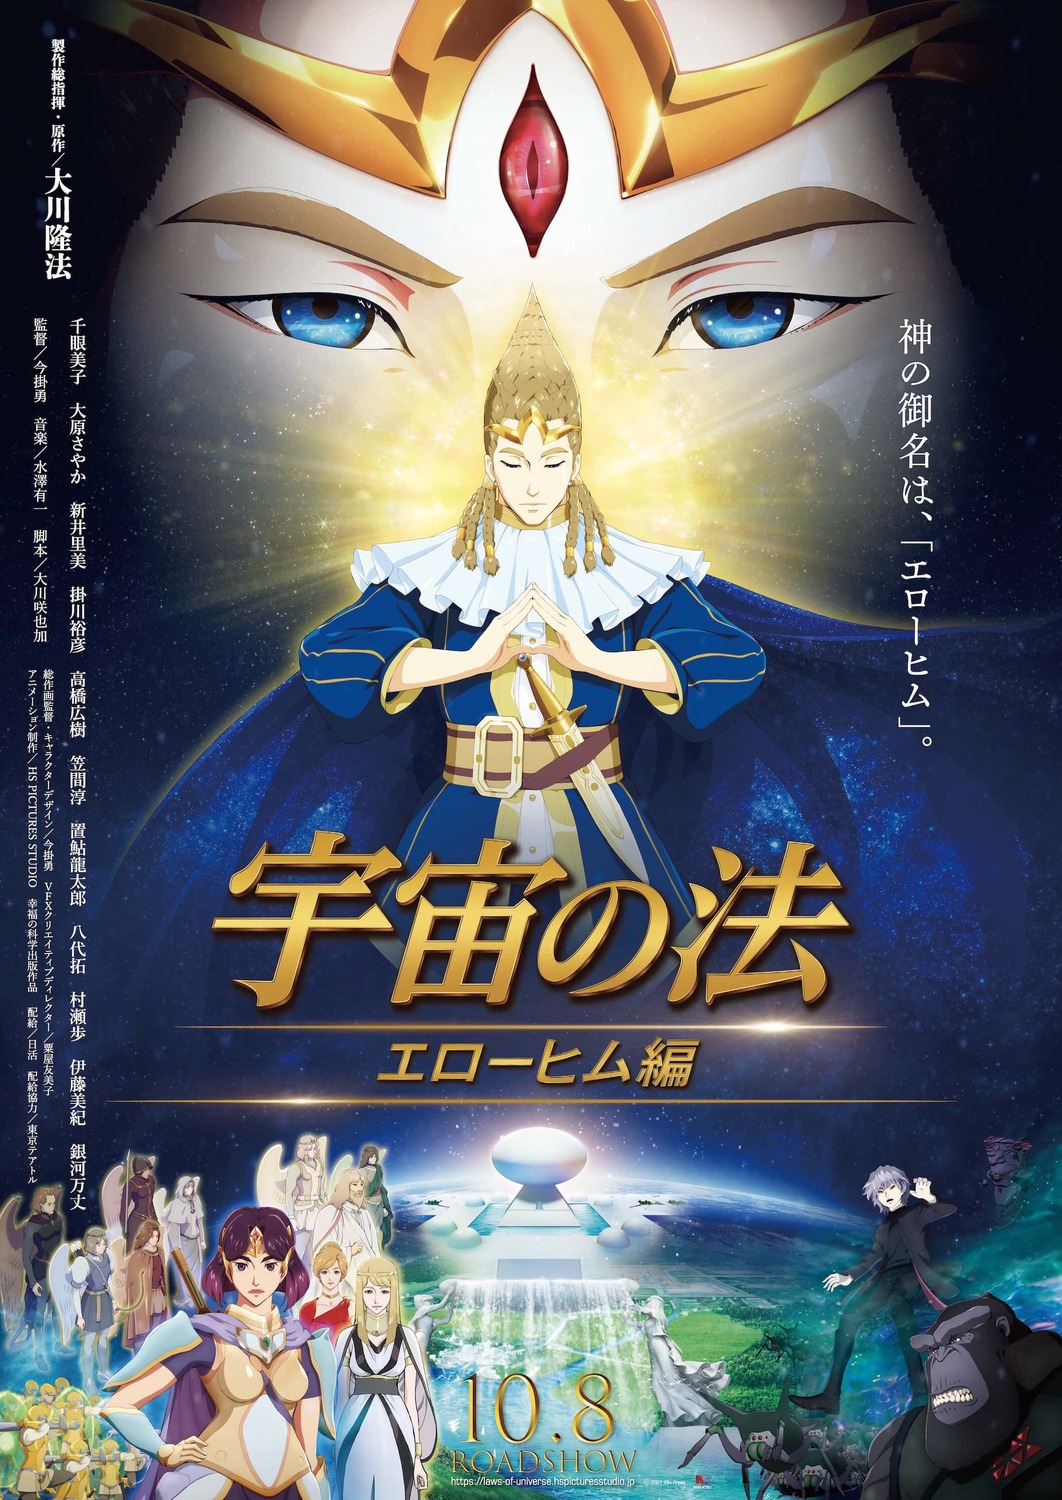 Extra Large Movie Poster Image for Uchuu no Hou: Erohim-hen (#1 of 2)